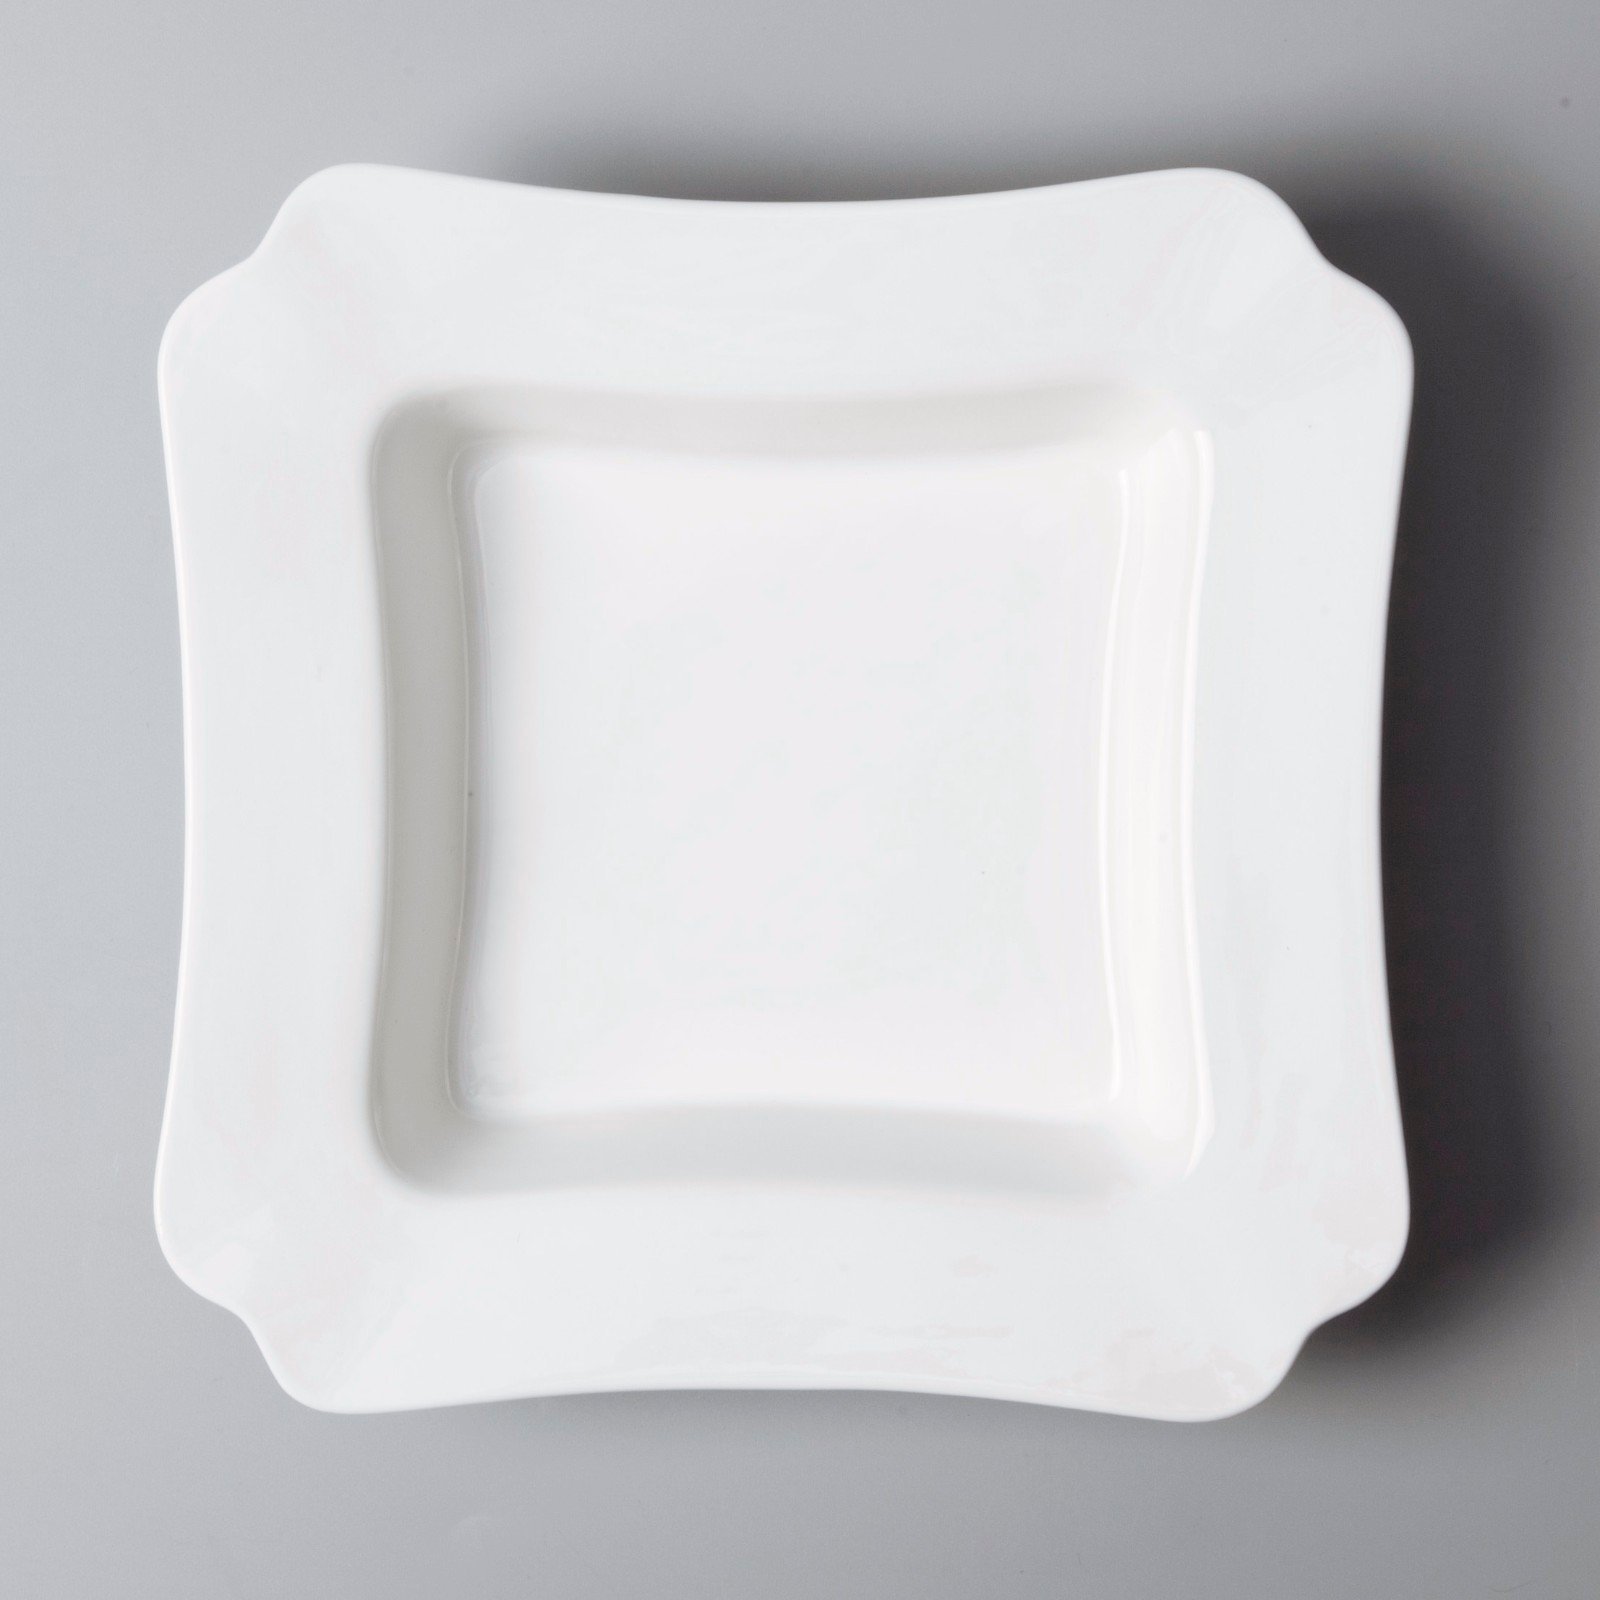 Wholesale white two eight ceramics Two Eight Brand